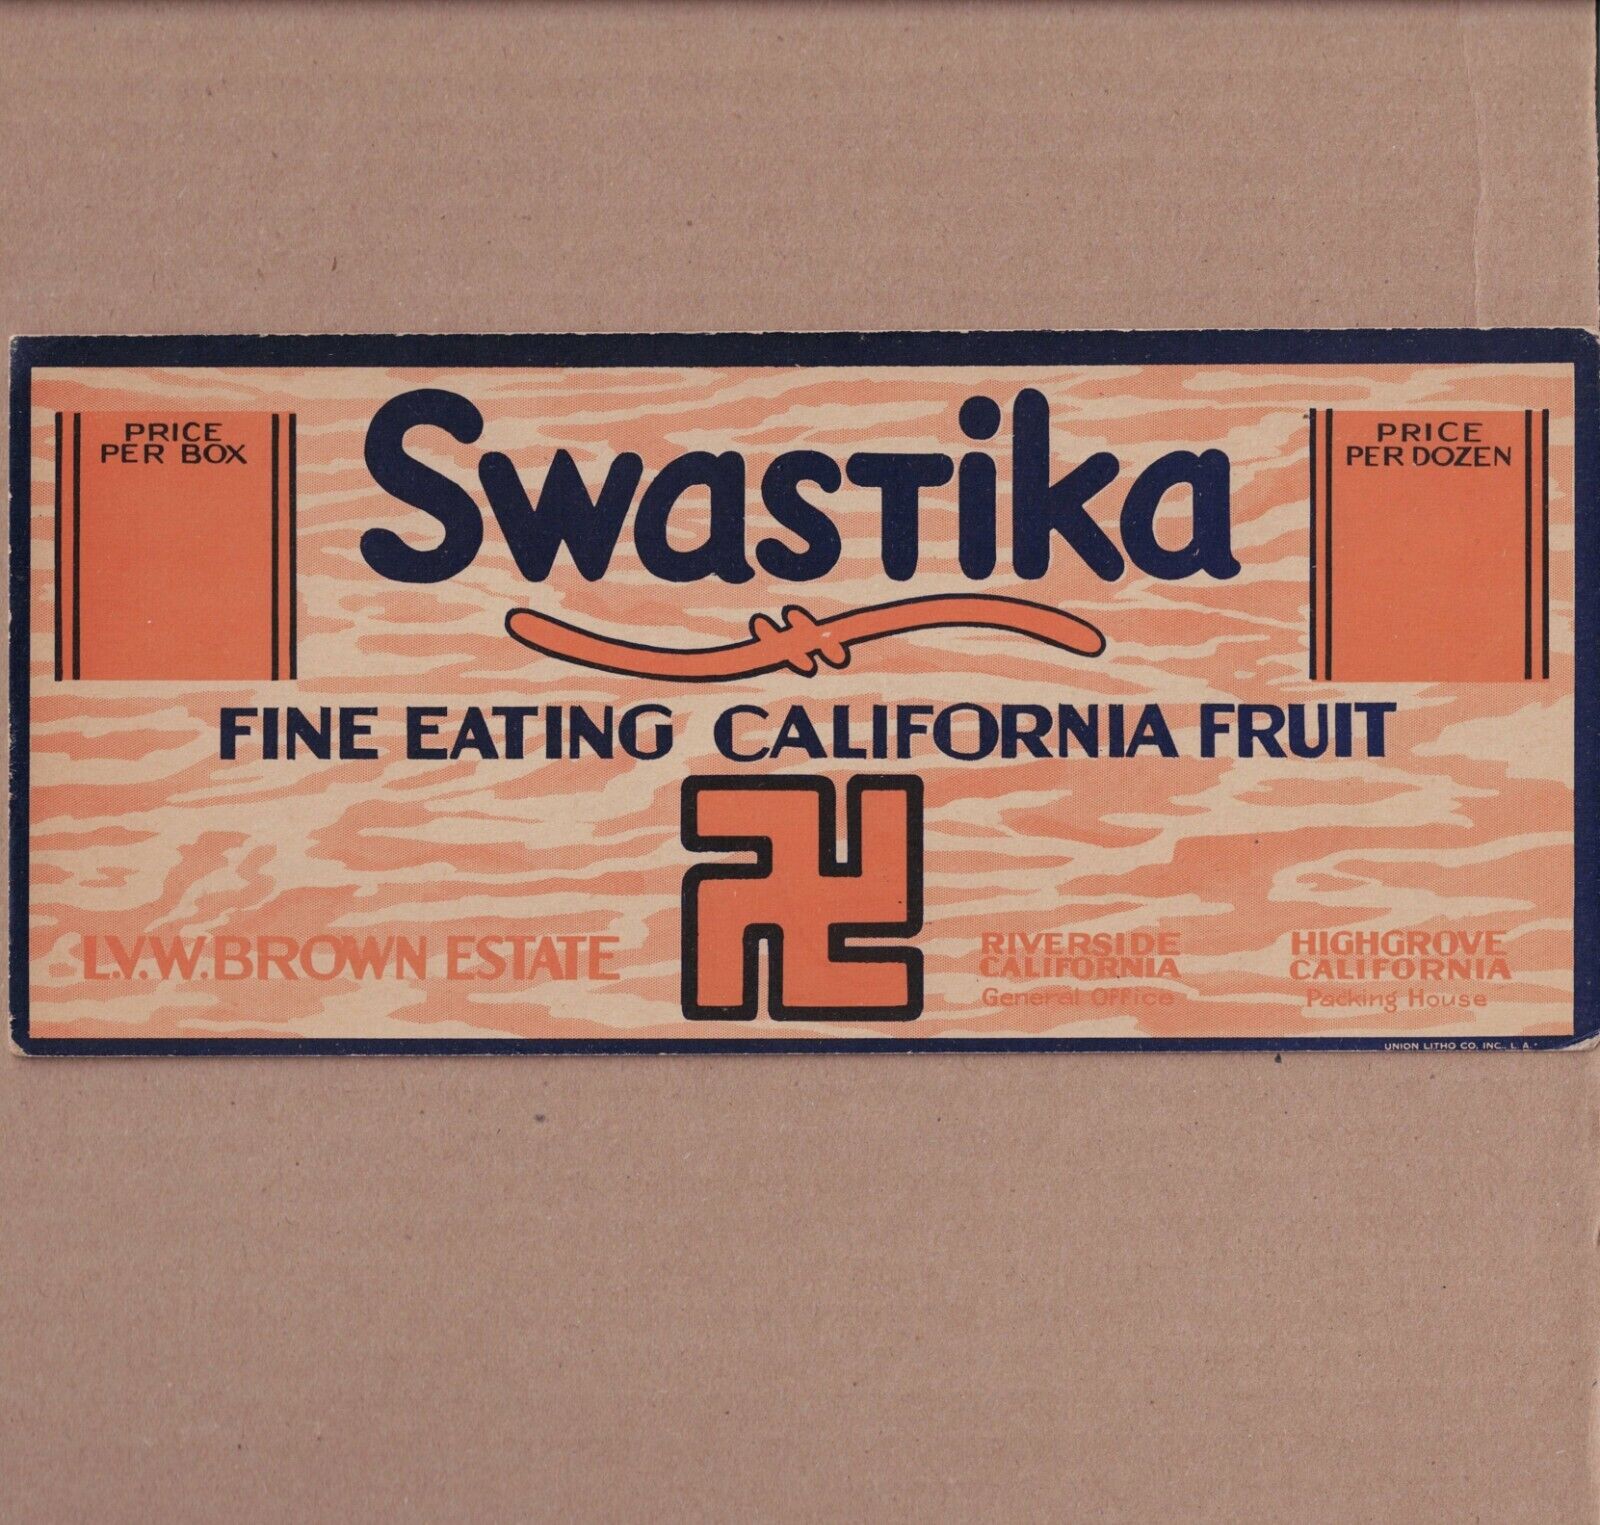 Original Unused SWASTIKA citrus fruit ad display header/label, Riverside, CA